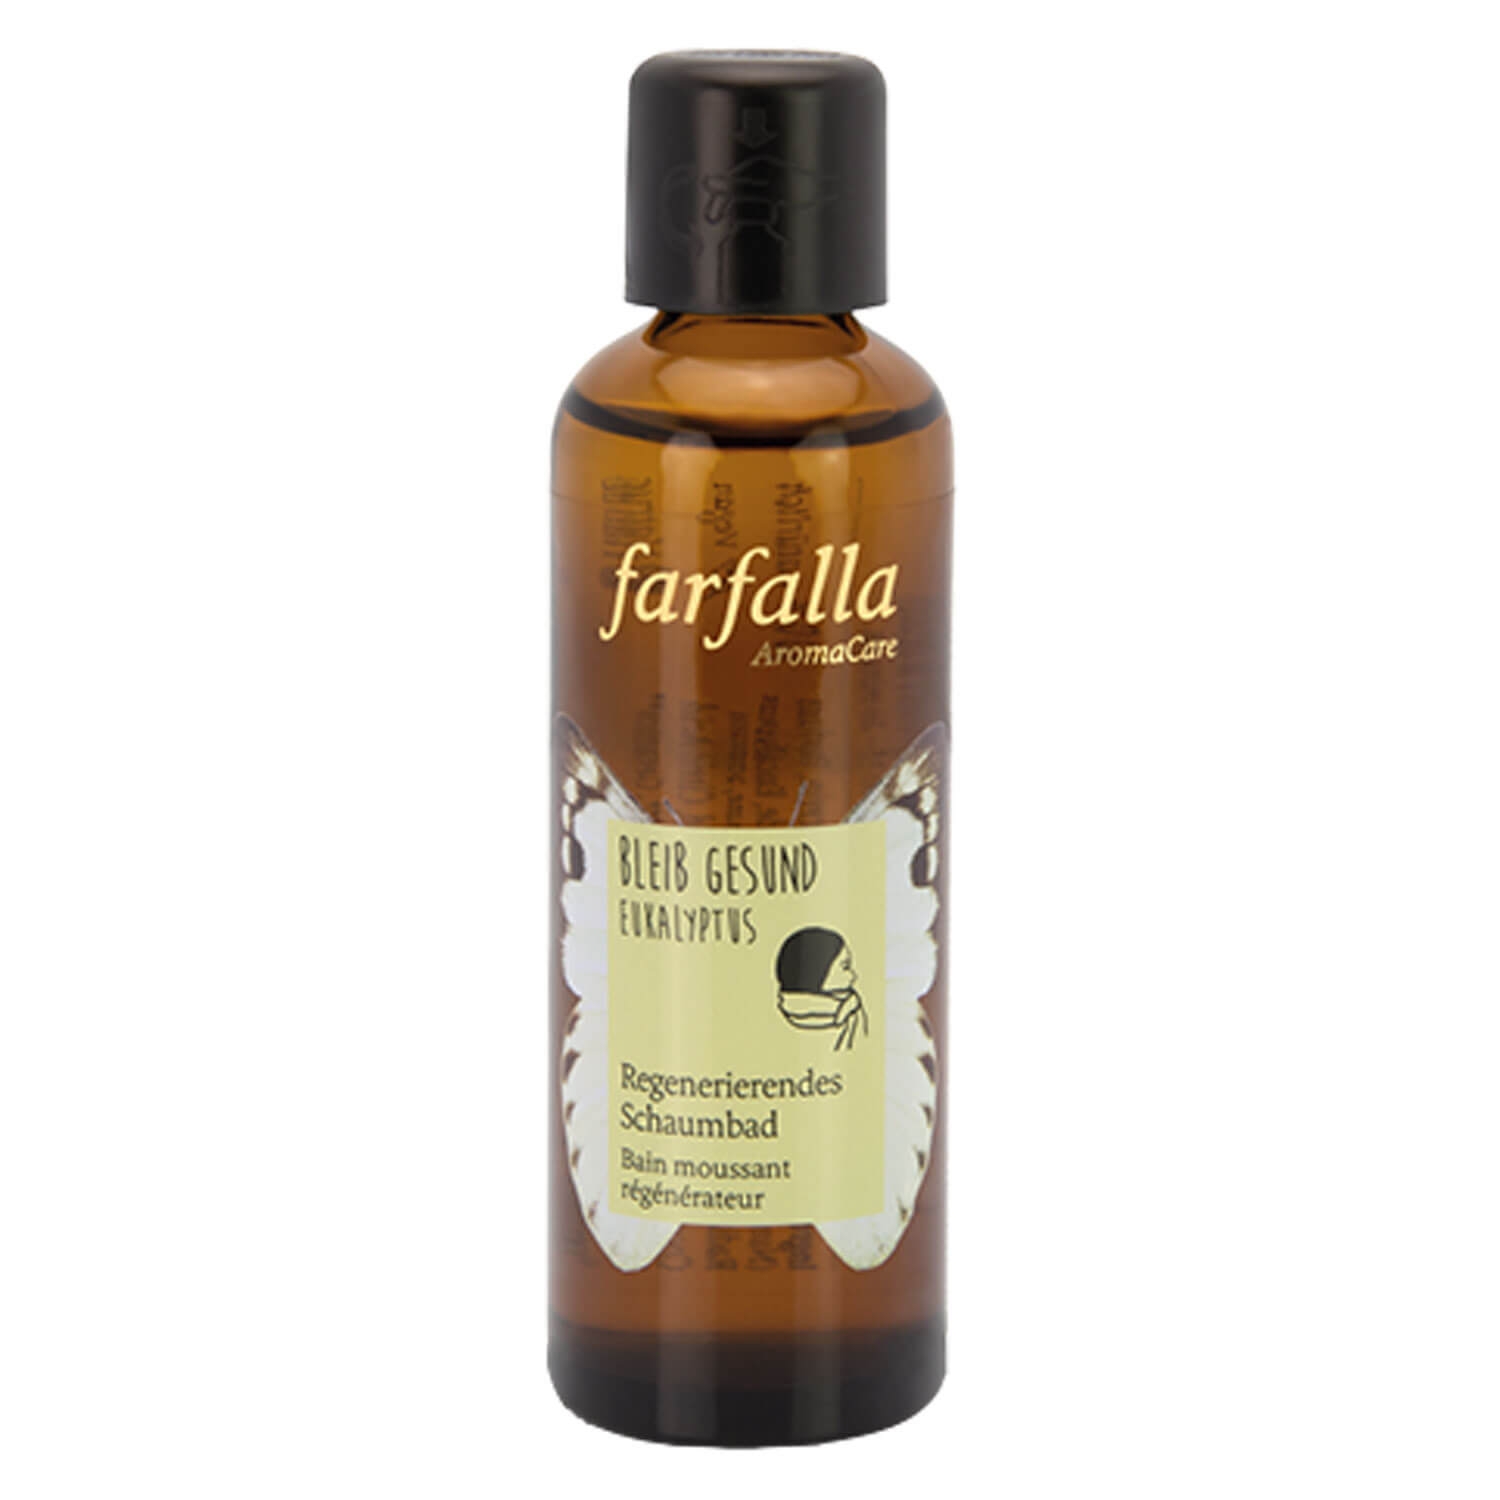 Product image from Farfalla Care - bleib gesund, Eukalyptus, Regenerierendes Schaumbad